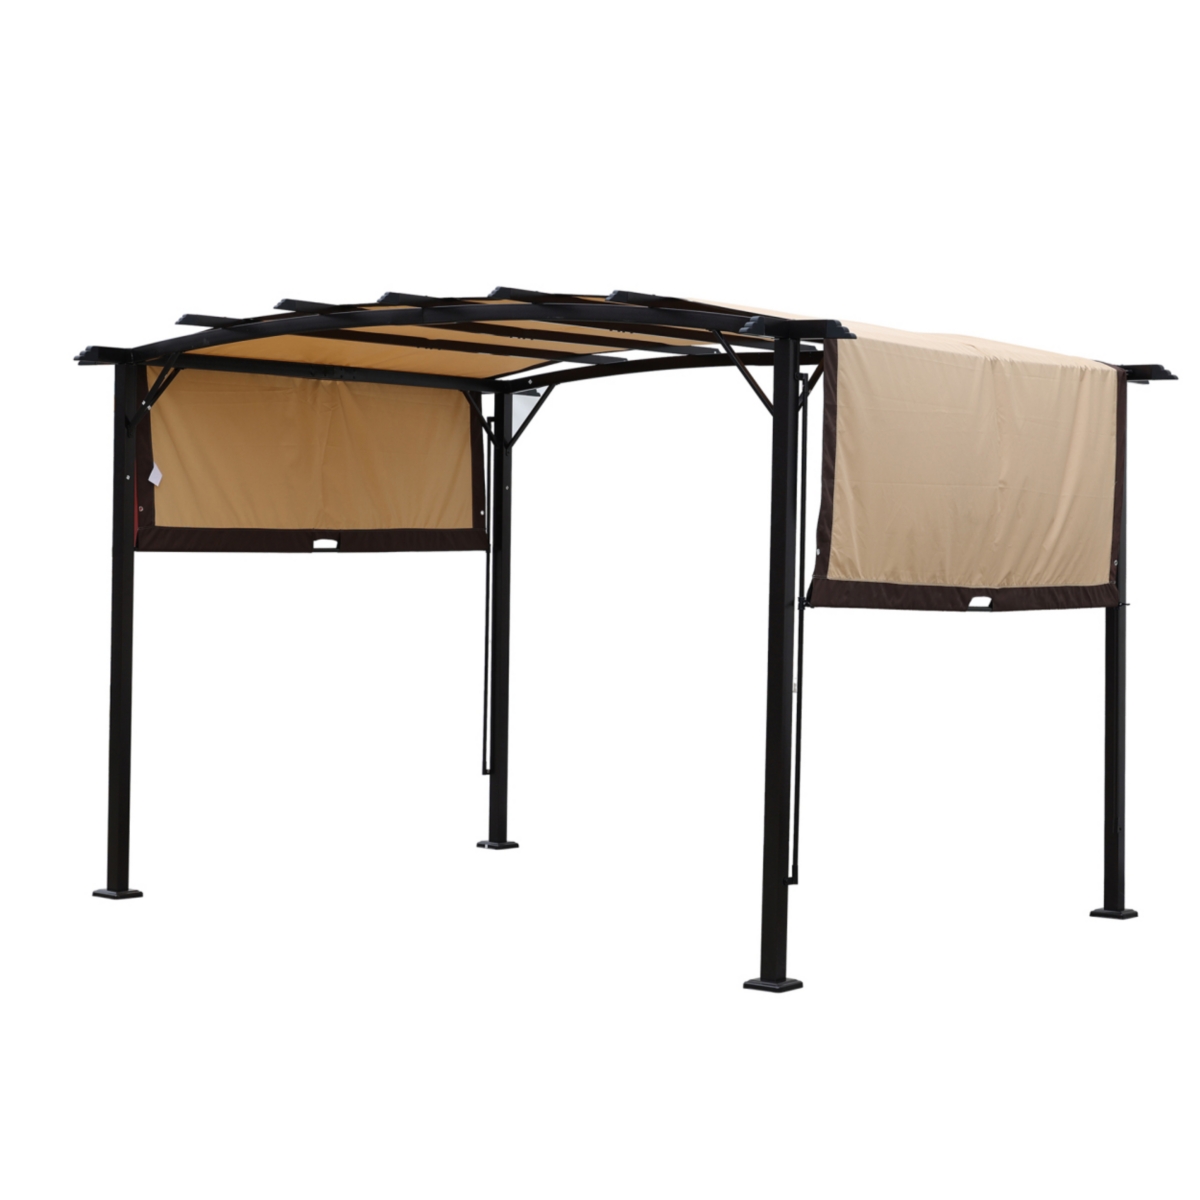 Retractable Canopy Pergola for Outdoor Spaces - Beige/khaki